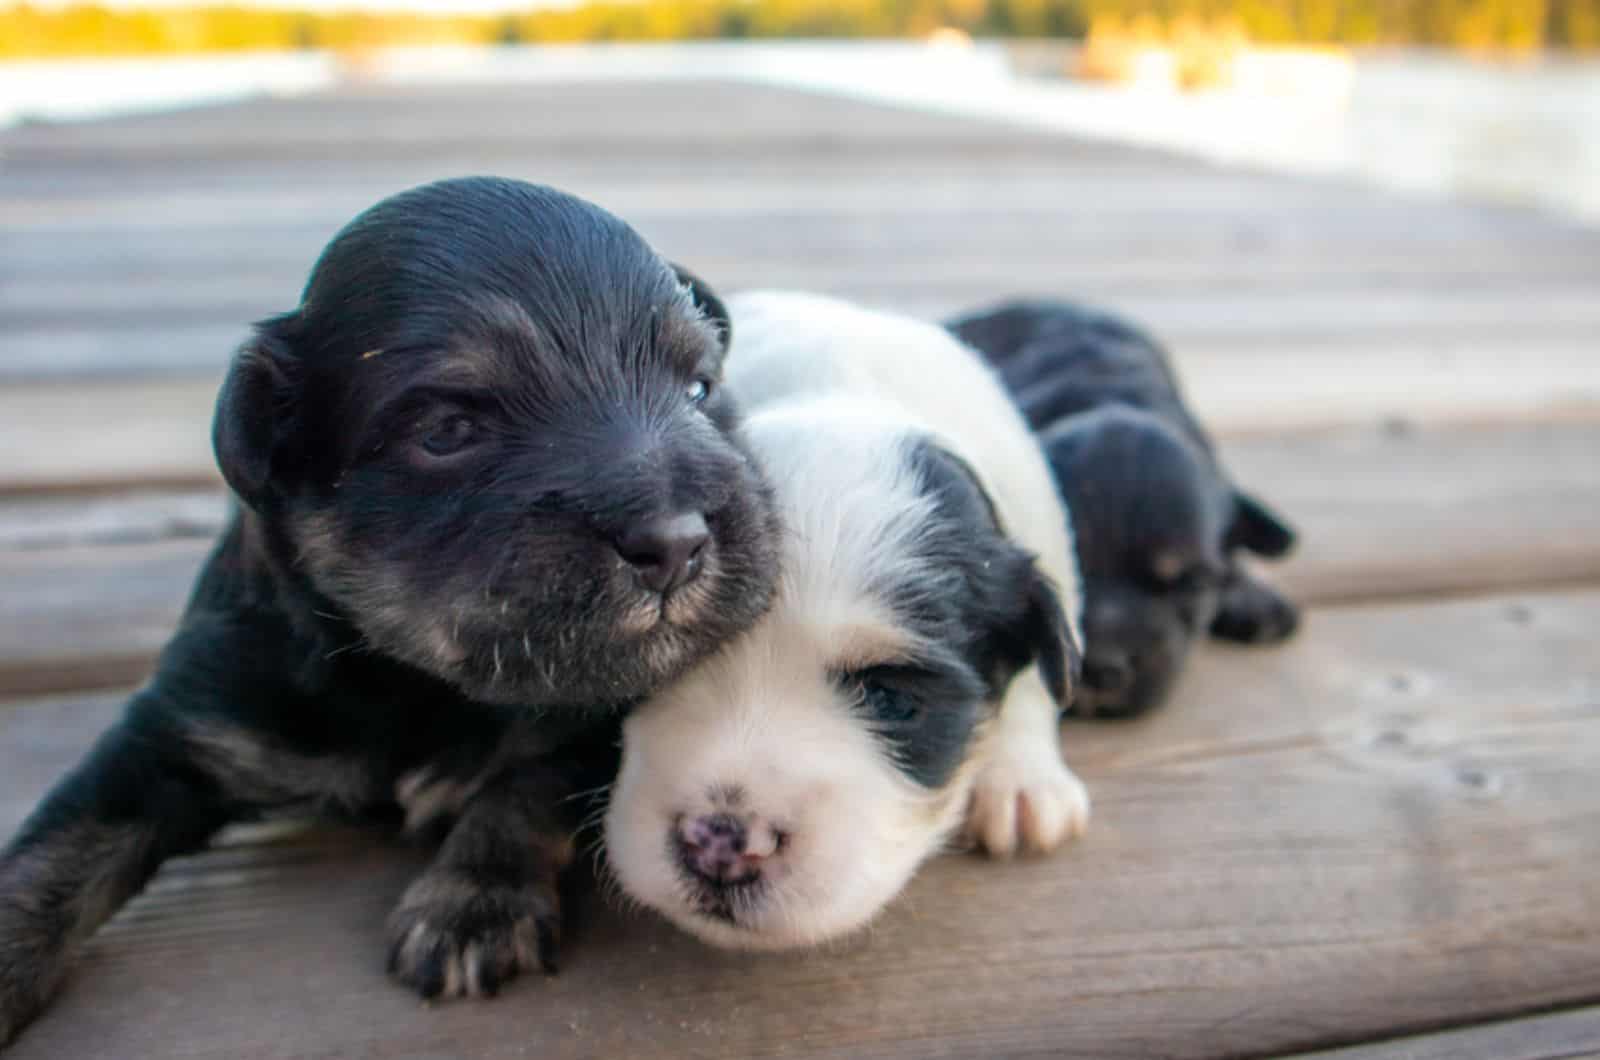 newborn miniature schnauzer puppies sleeping together